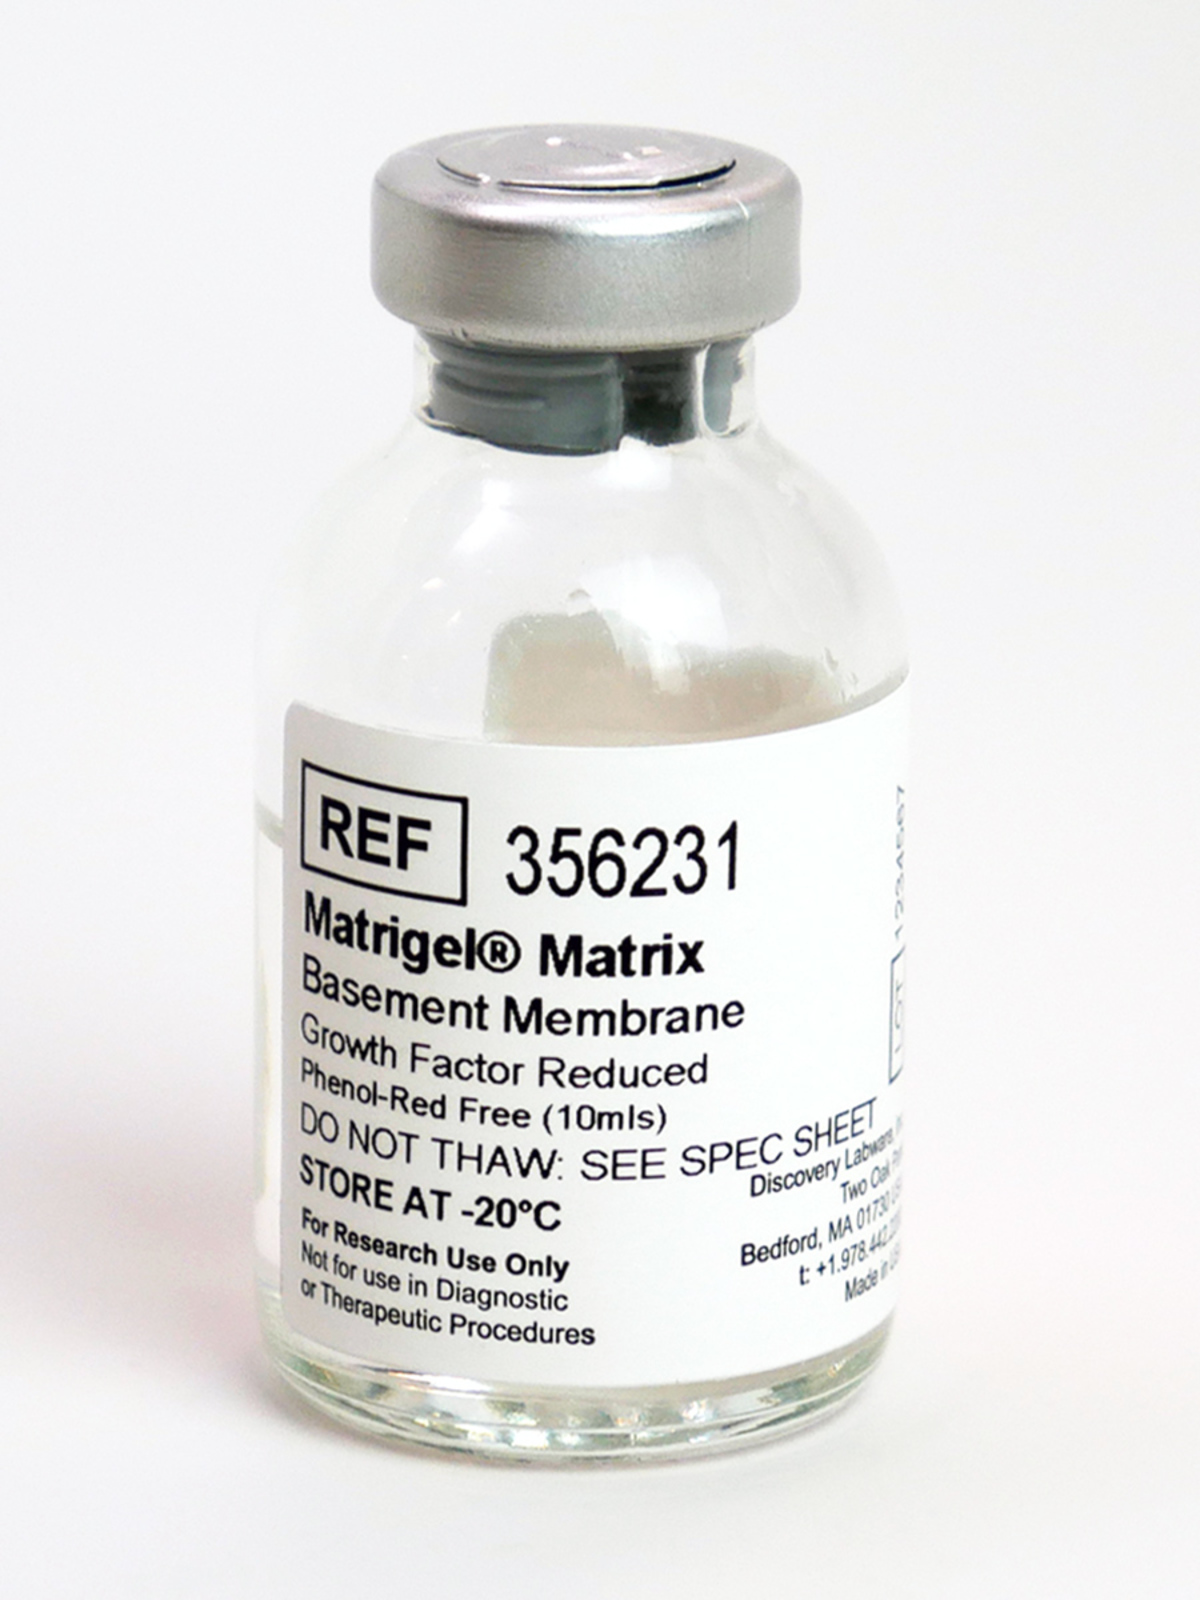 Corning® Matrigel® Growth Factor Reduced (GFR) Basement Membrane Matrix, Phenol Red-Free, 10mL